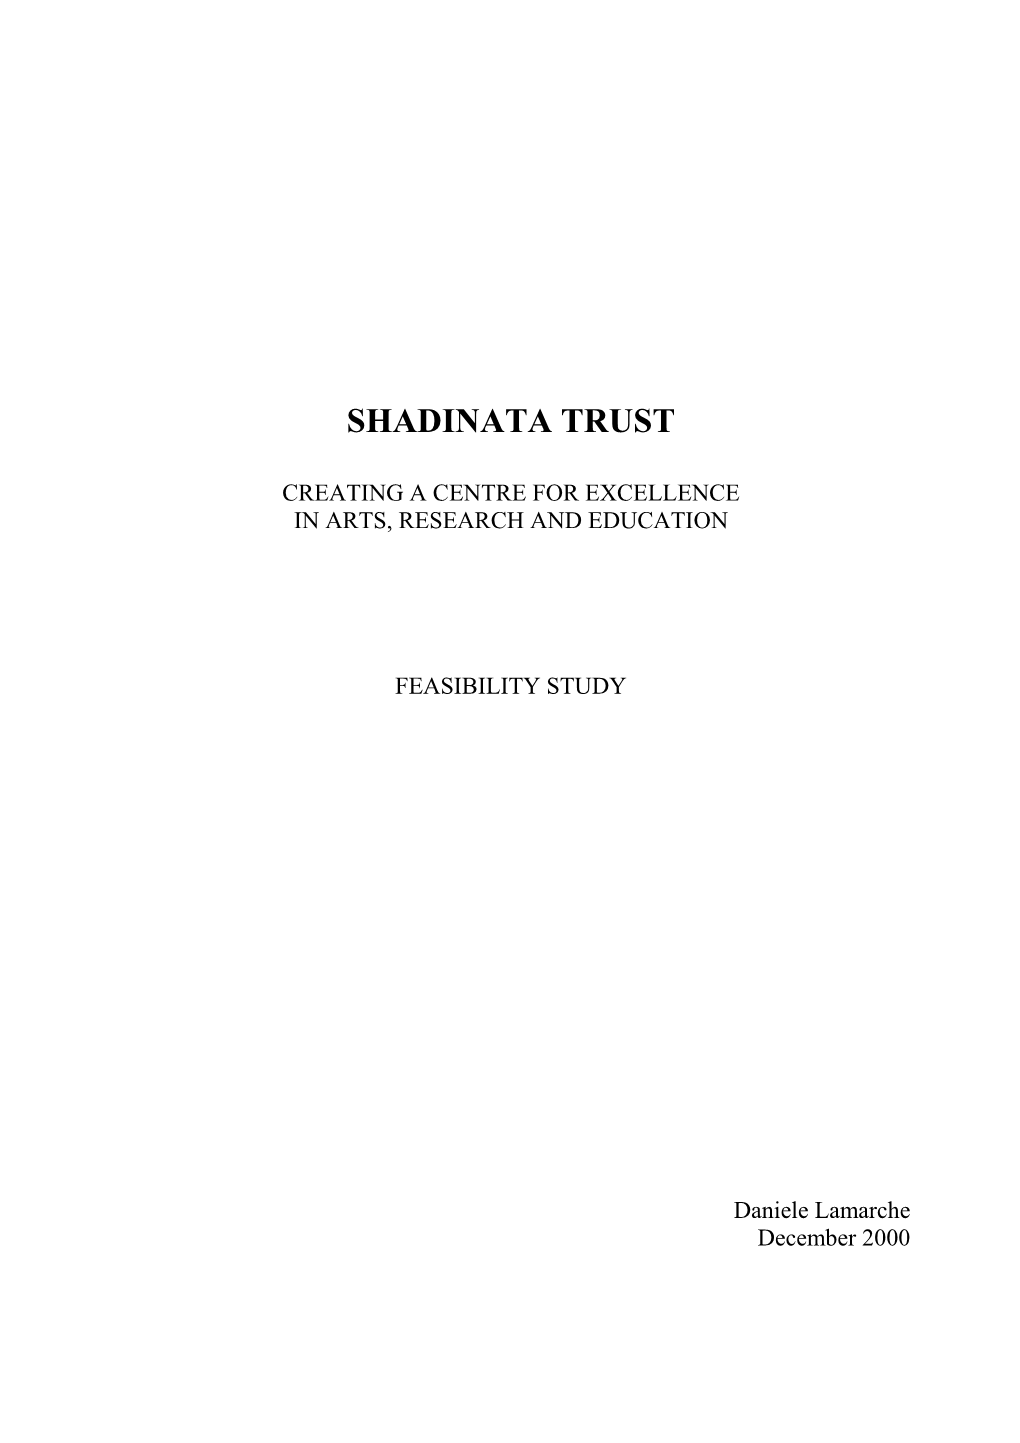 Shadinata Trust